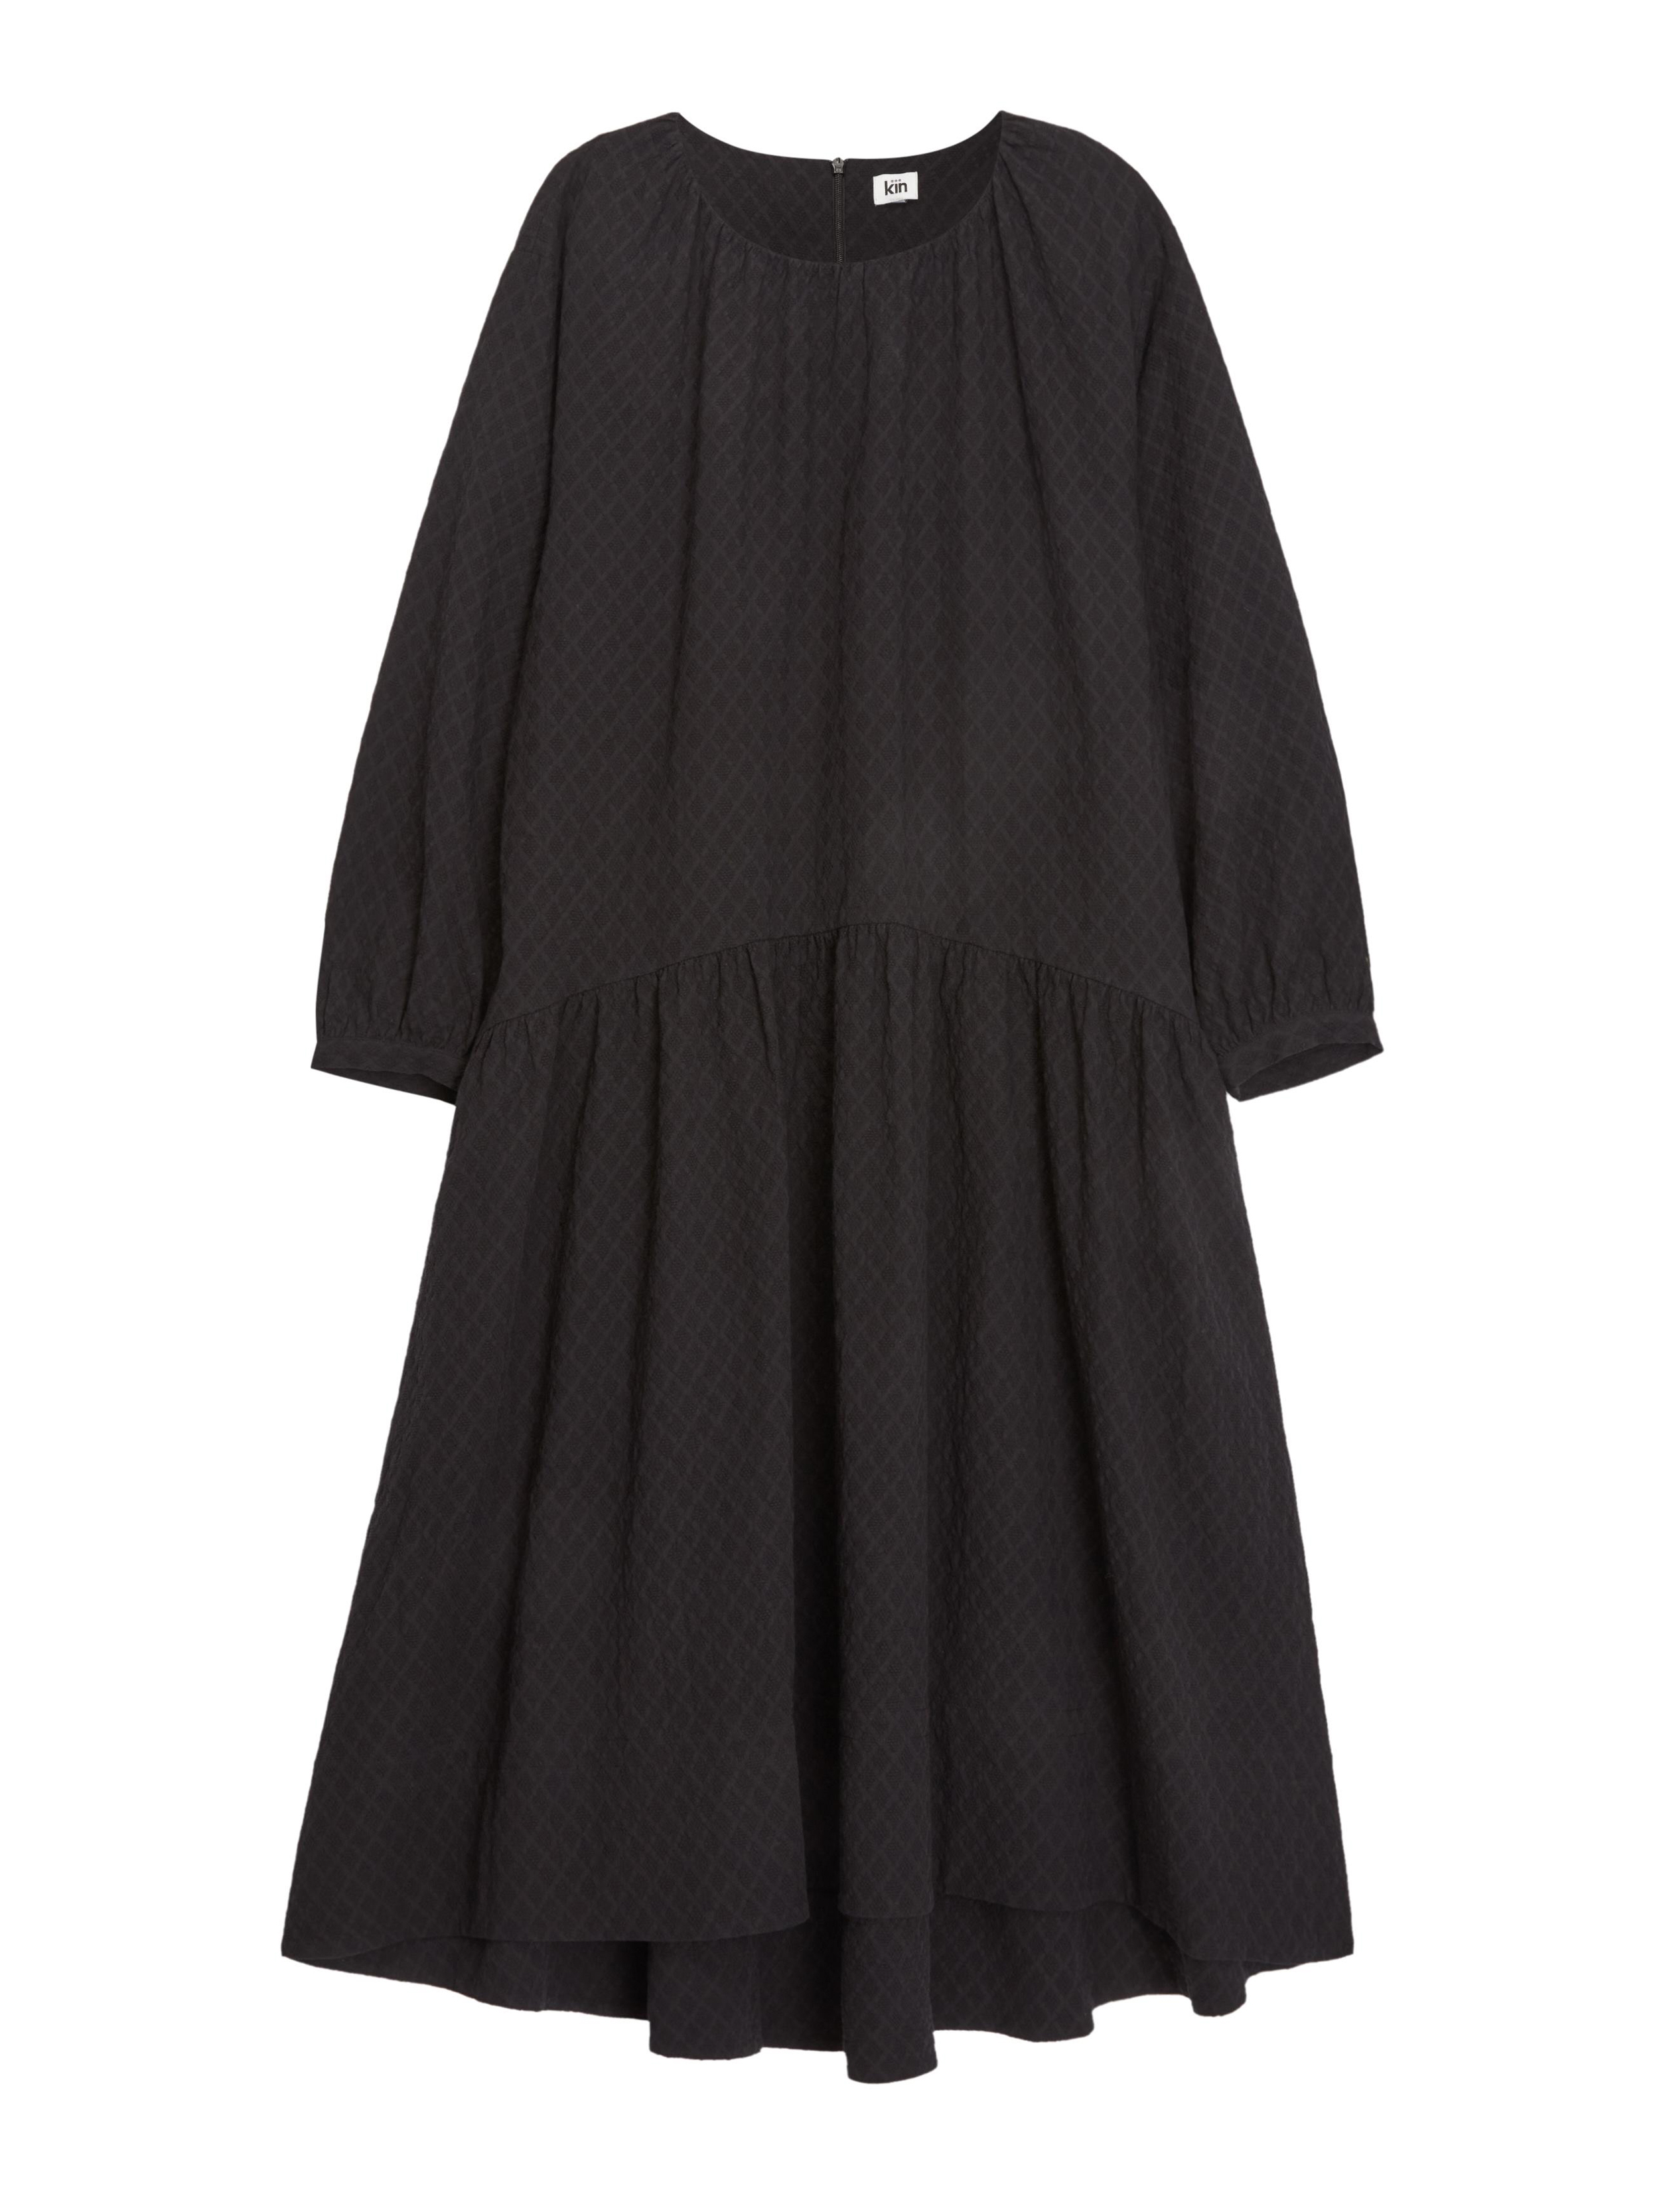 Black smock dress